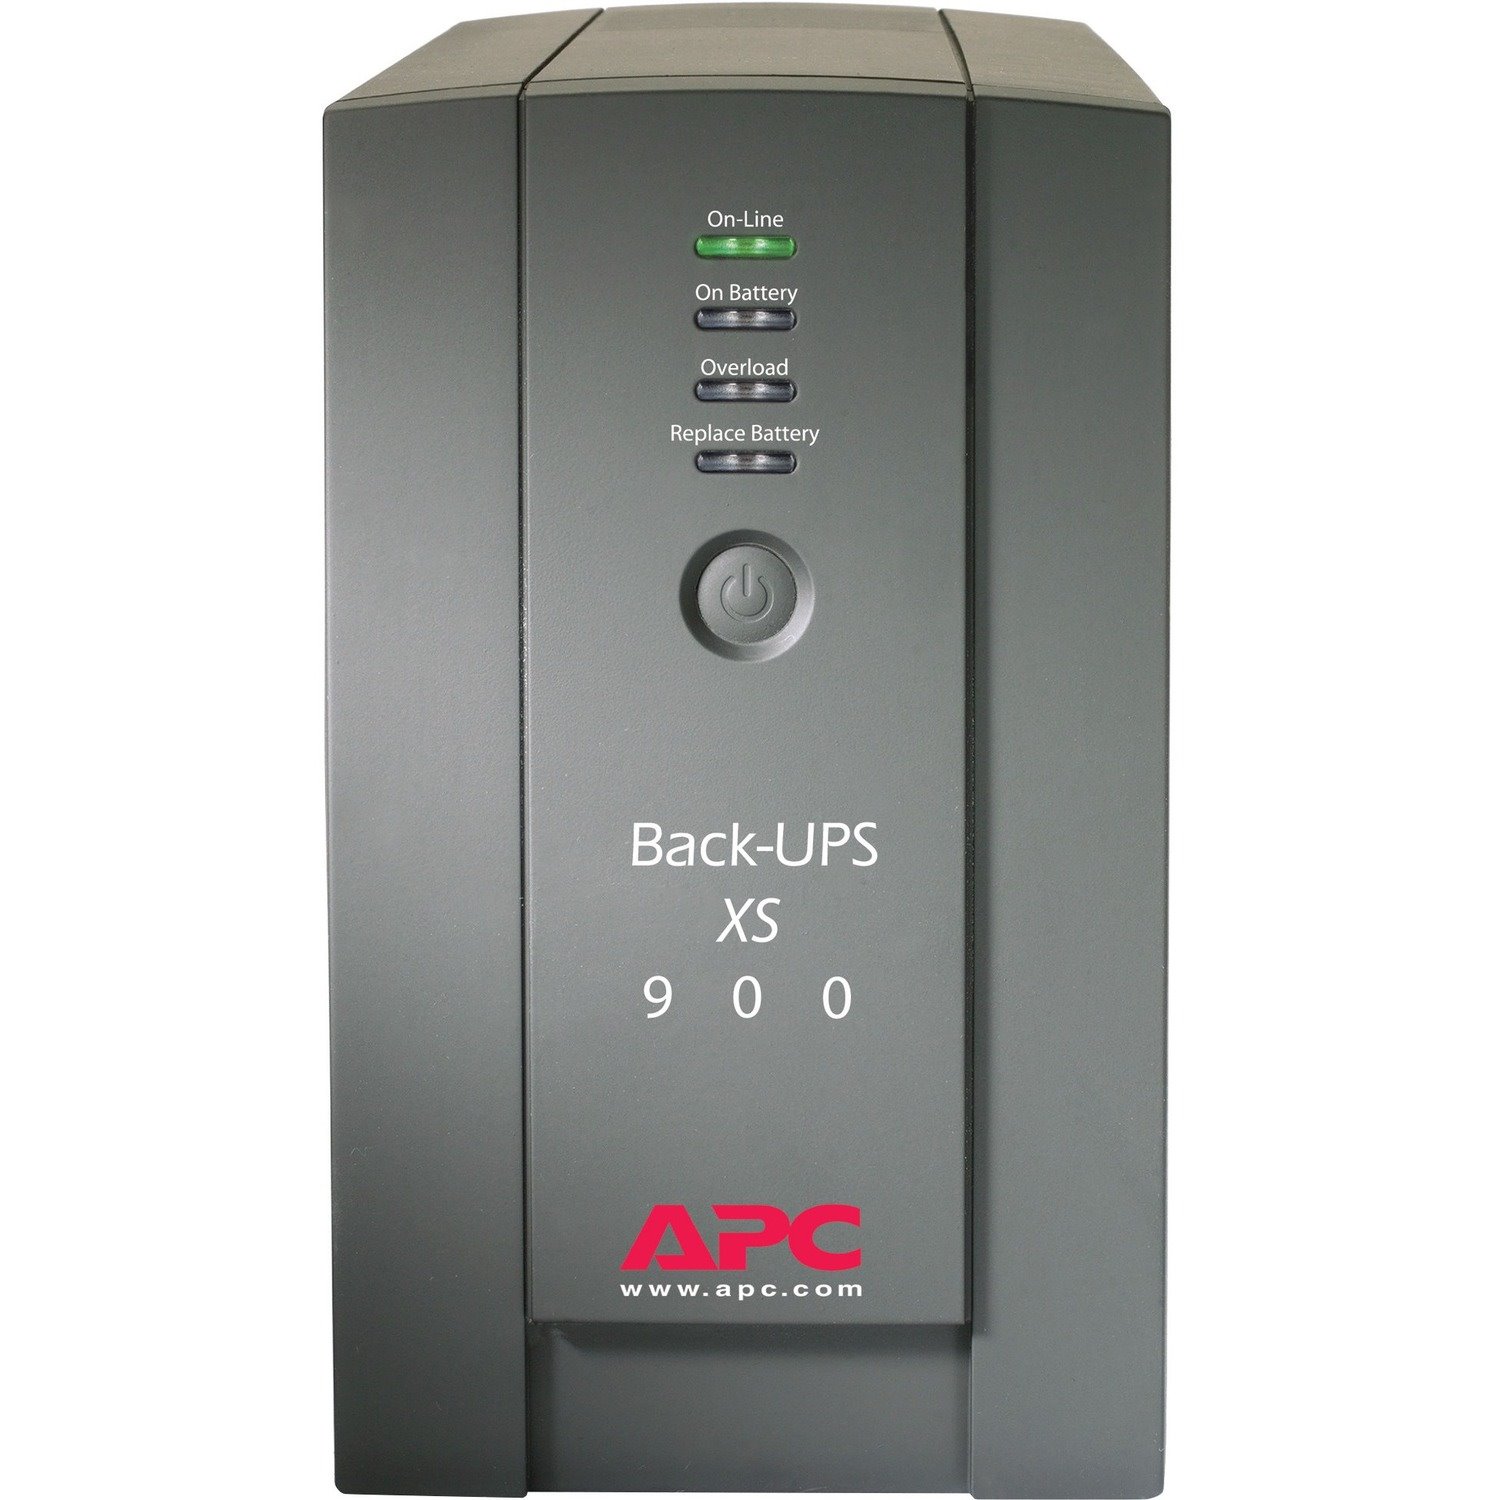 APC by Schneider Electric Back-UPS XS 900VA Tower UPS